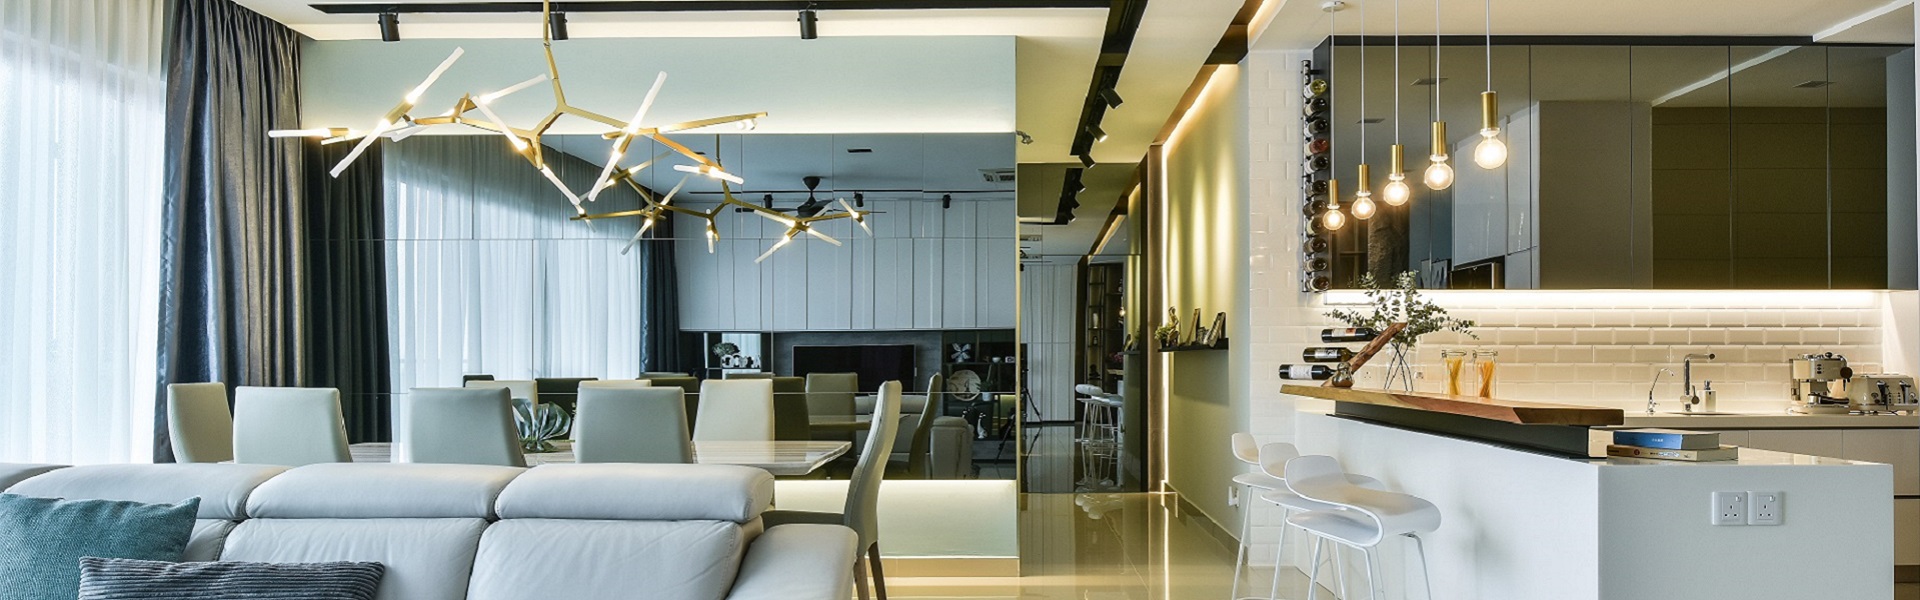 interior design studio cheras | interior design firms cheras